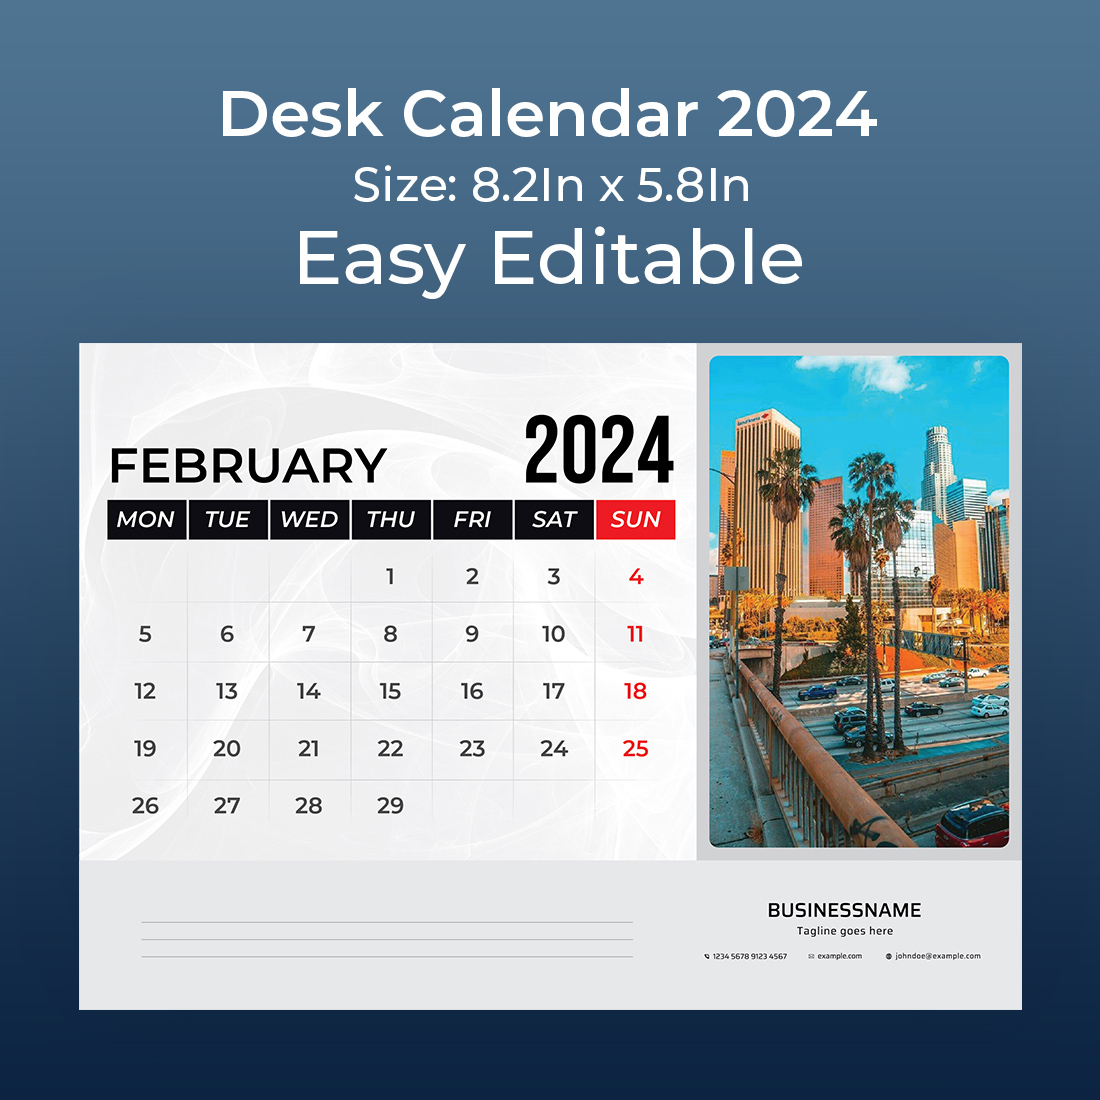 desk calendar 2024 preview image.